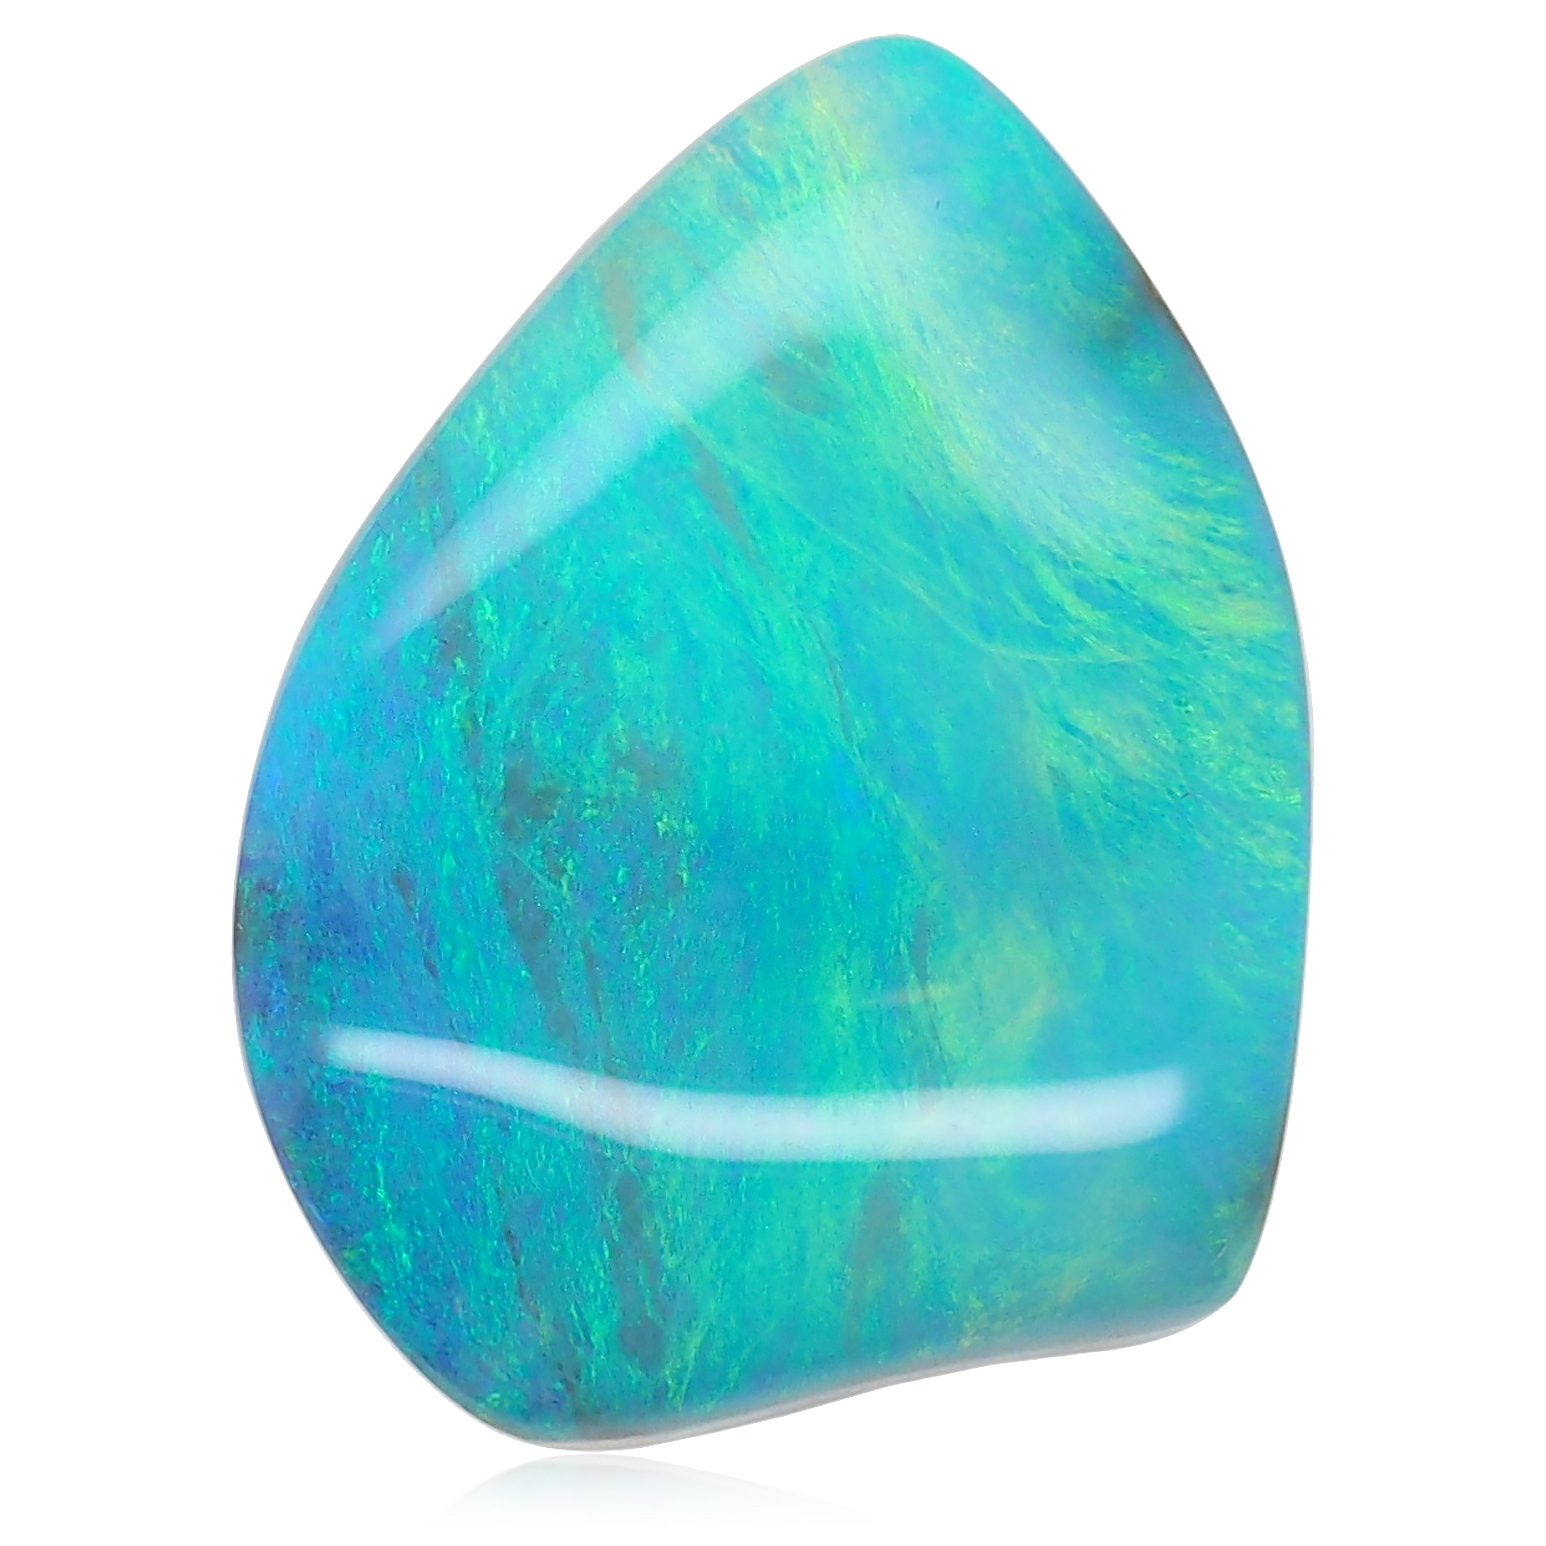 Solid Unset Boulder Opal Opals Down Under